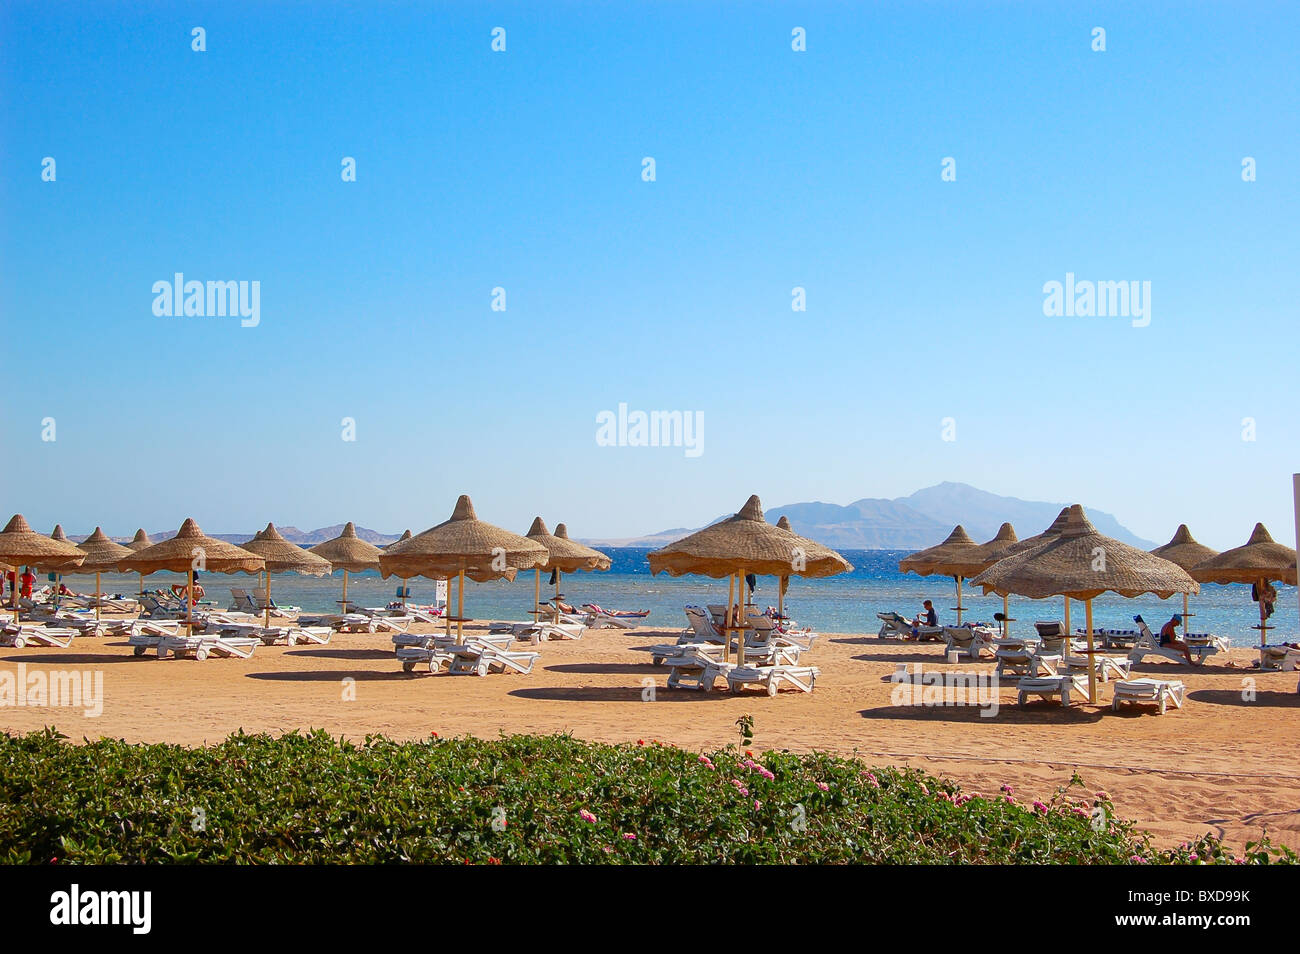 Beach of the luxury hotel, Sharm el Sheikh, Egypt Stock Photo